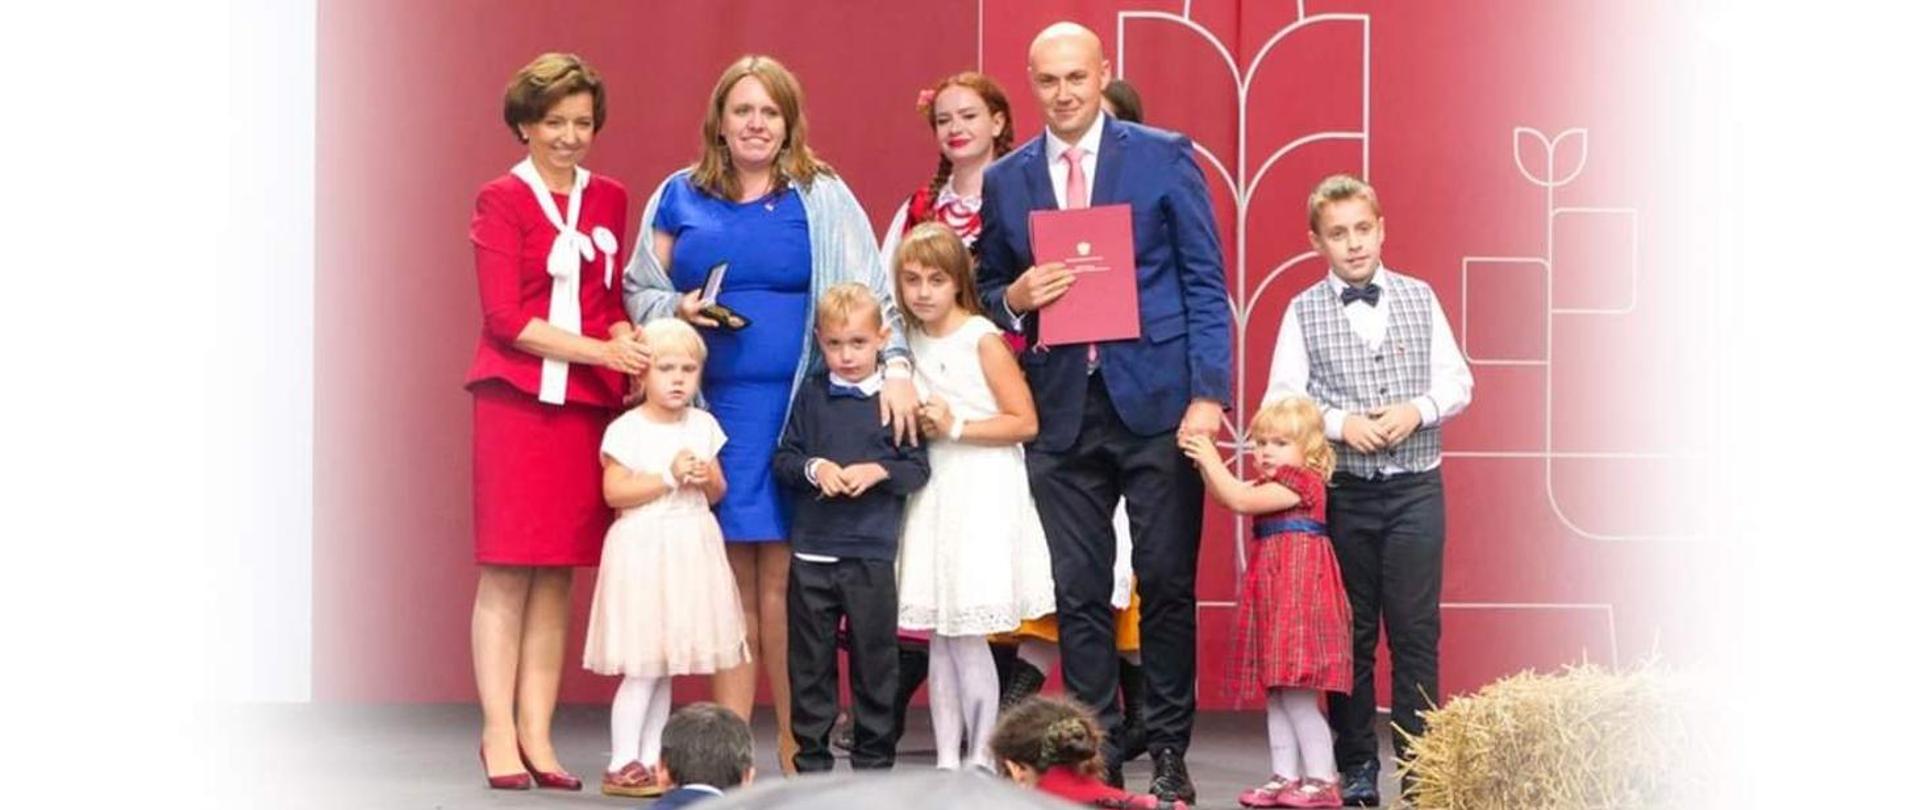 Minister Marlena Maląg awarded the “Meritis Pro Familia” badges